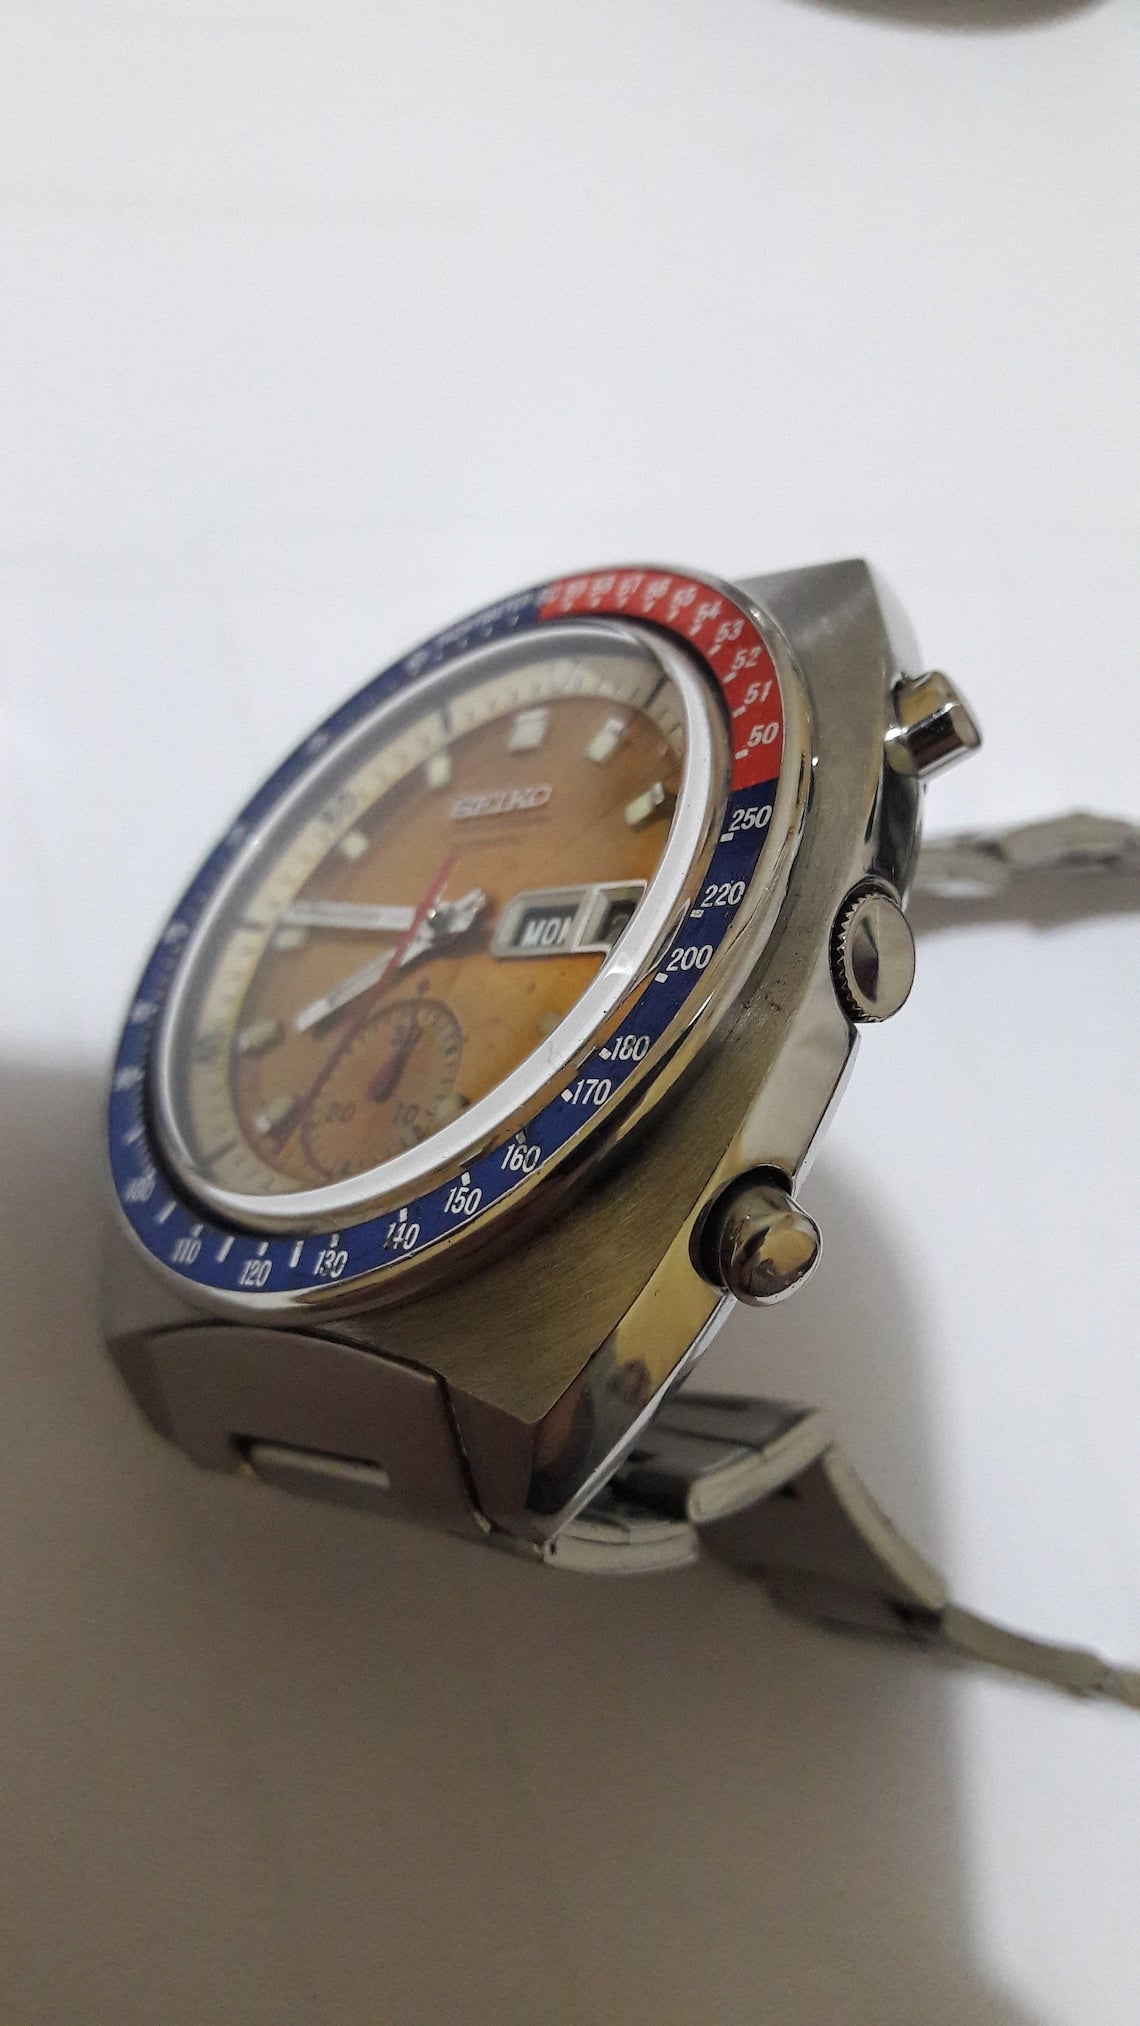 Vintage Retro Watches for Sale Online Seiko Pogue Pepsi bezel automatic chronograph